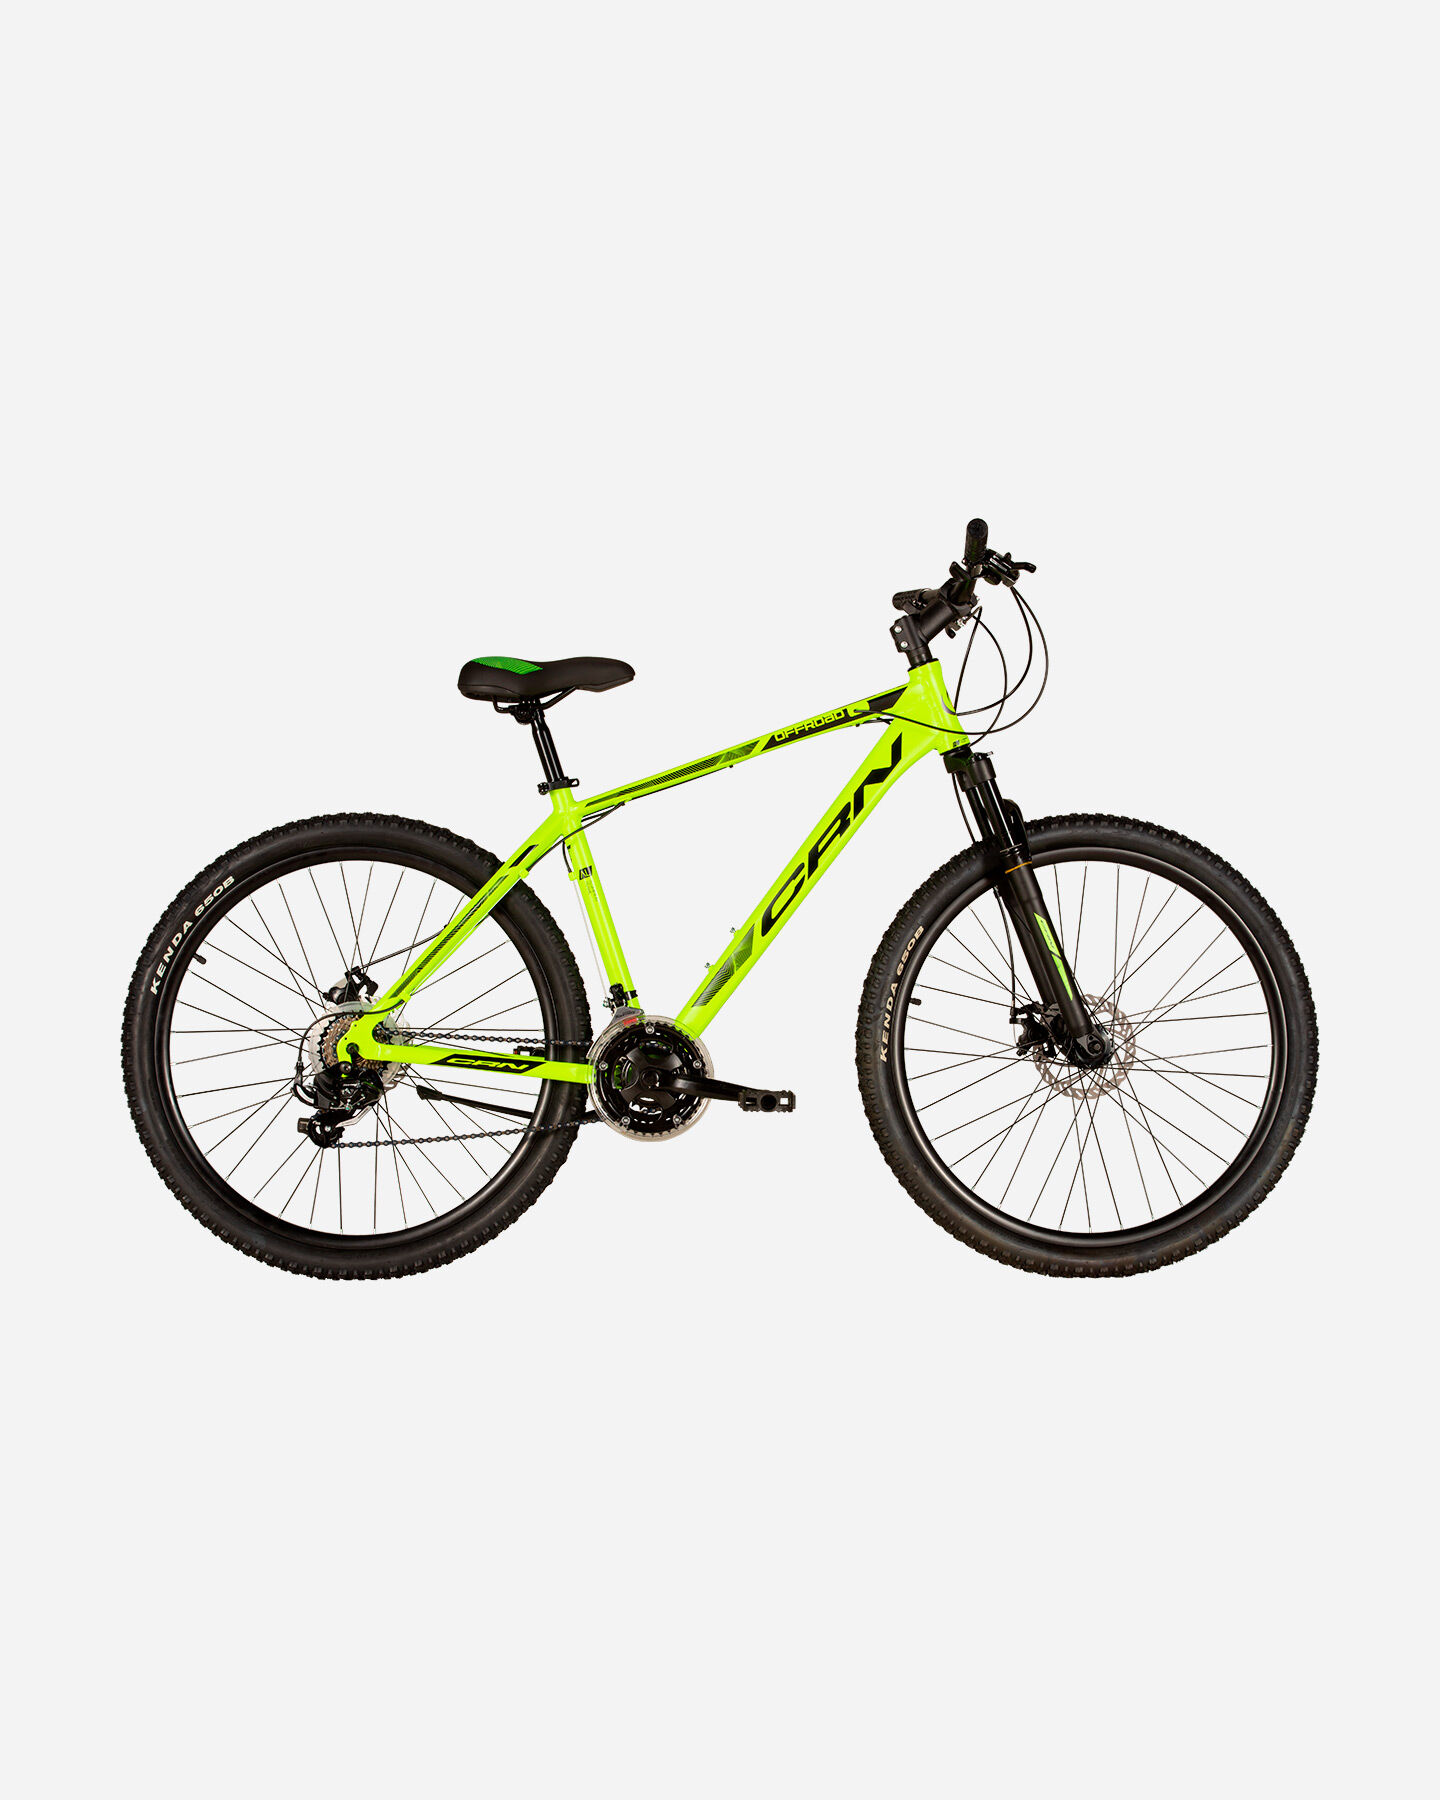  Mountain bike CARNIELLI MOUNTAIN BIKE 1000  S4113182|1|21 scatto 0